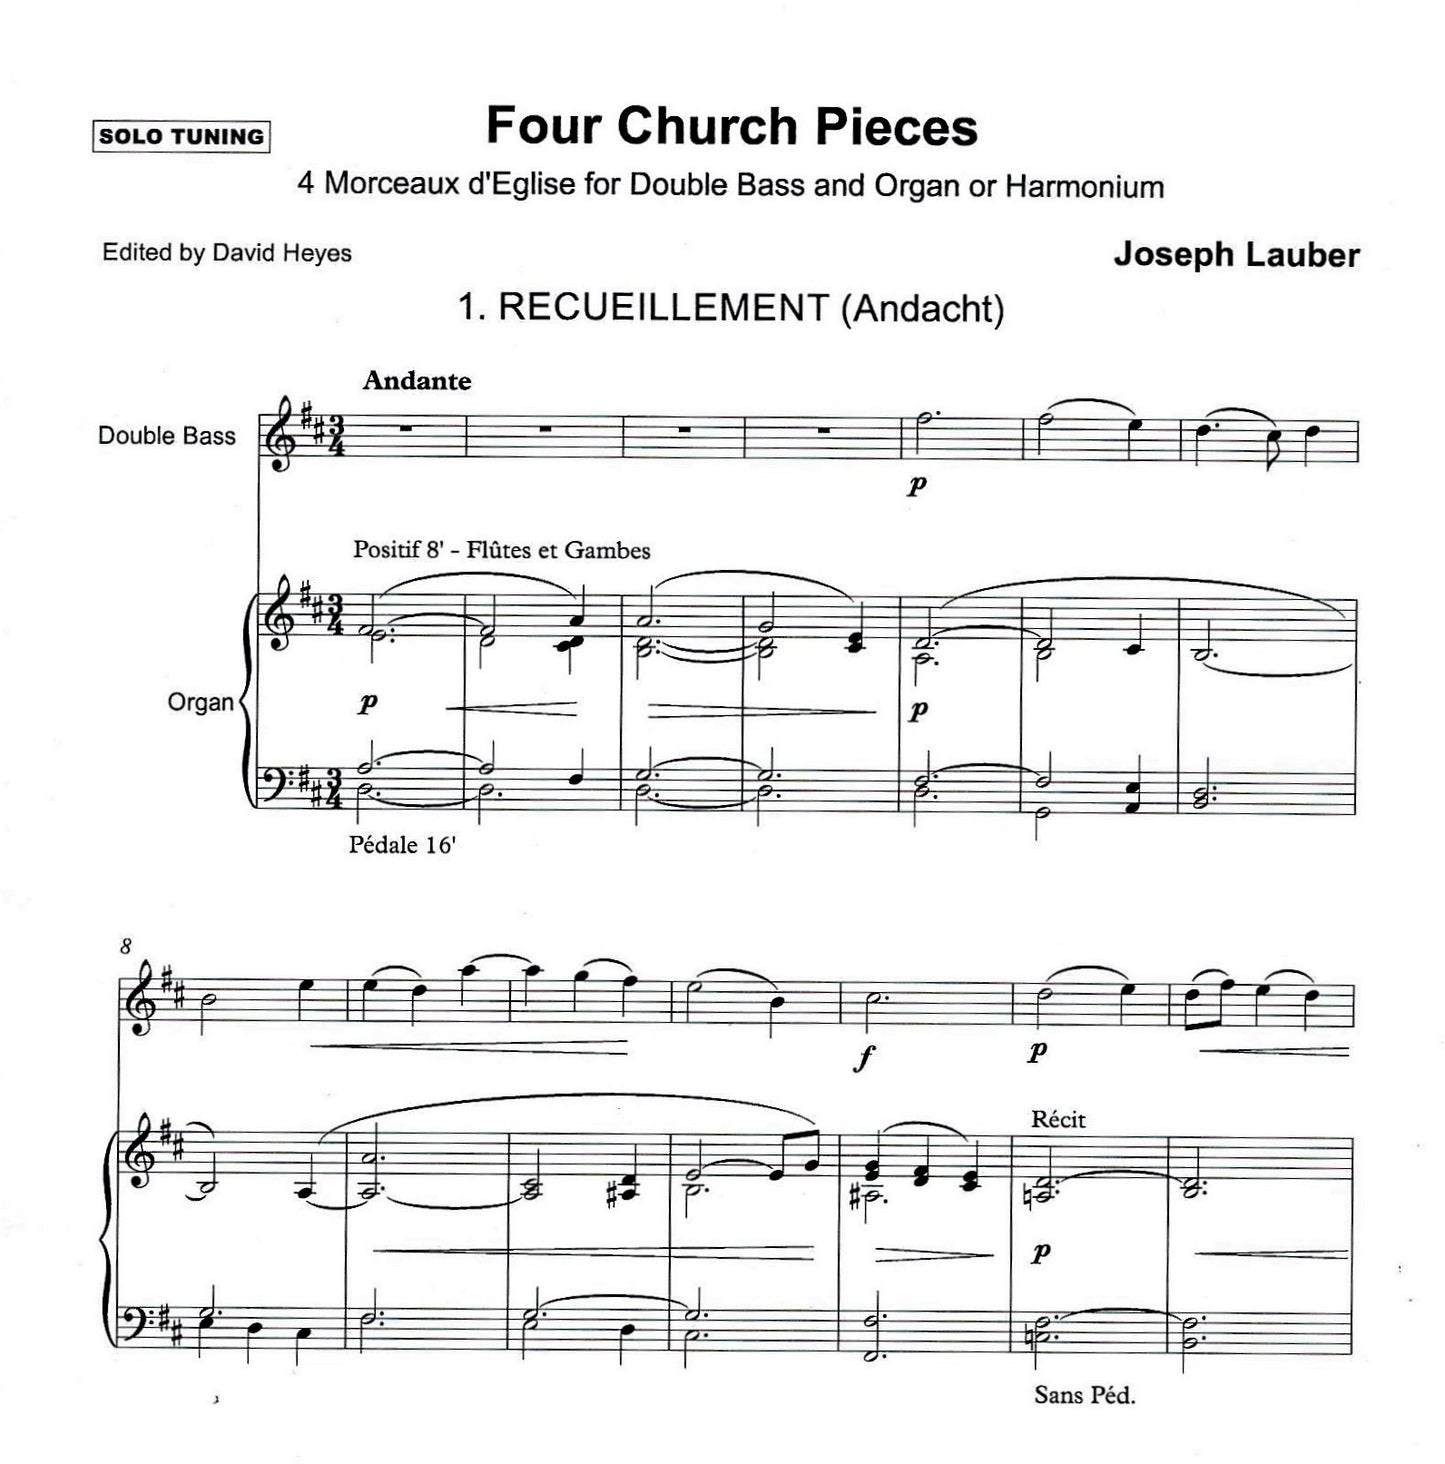 Jospeh Lauber: Four Church Pieces for double bass & organ (harmonium or piano)